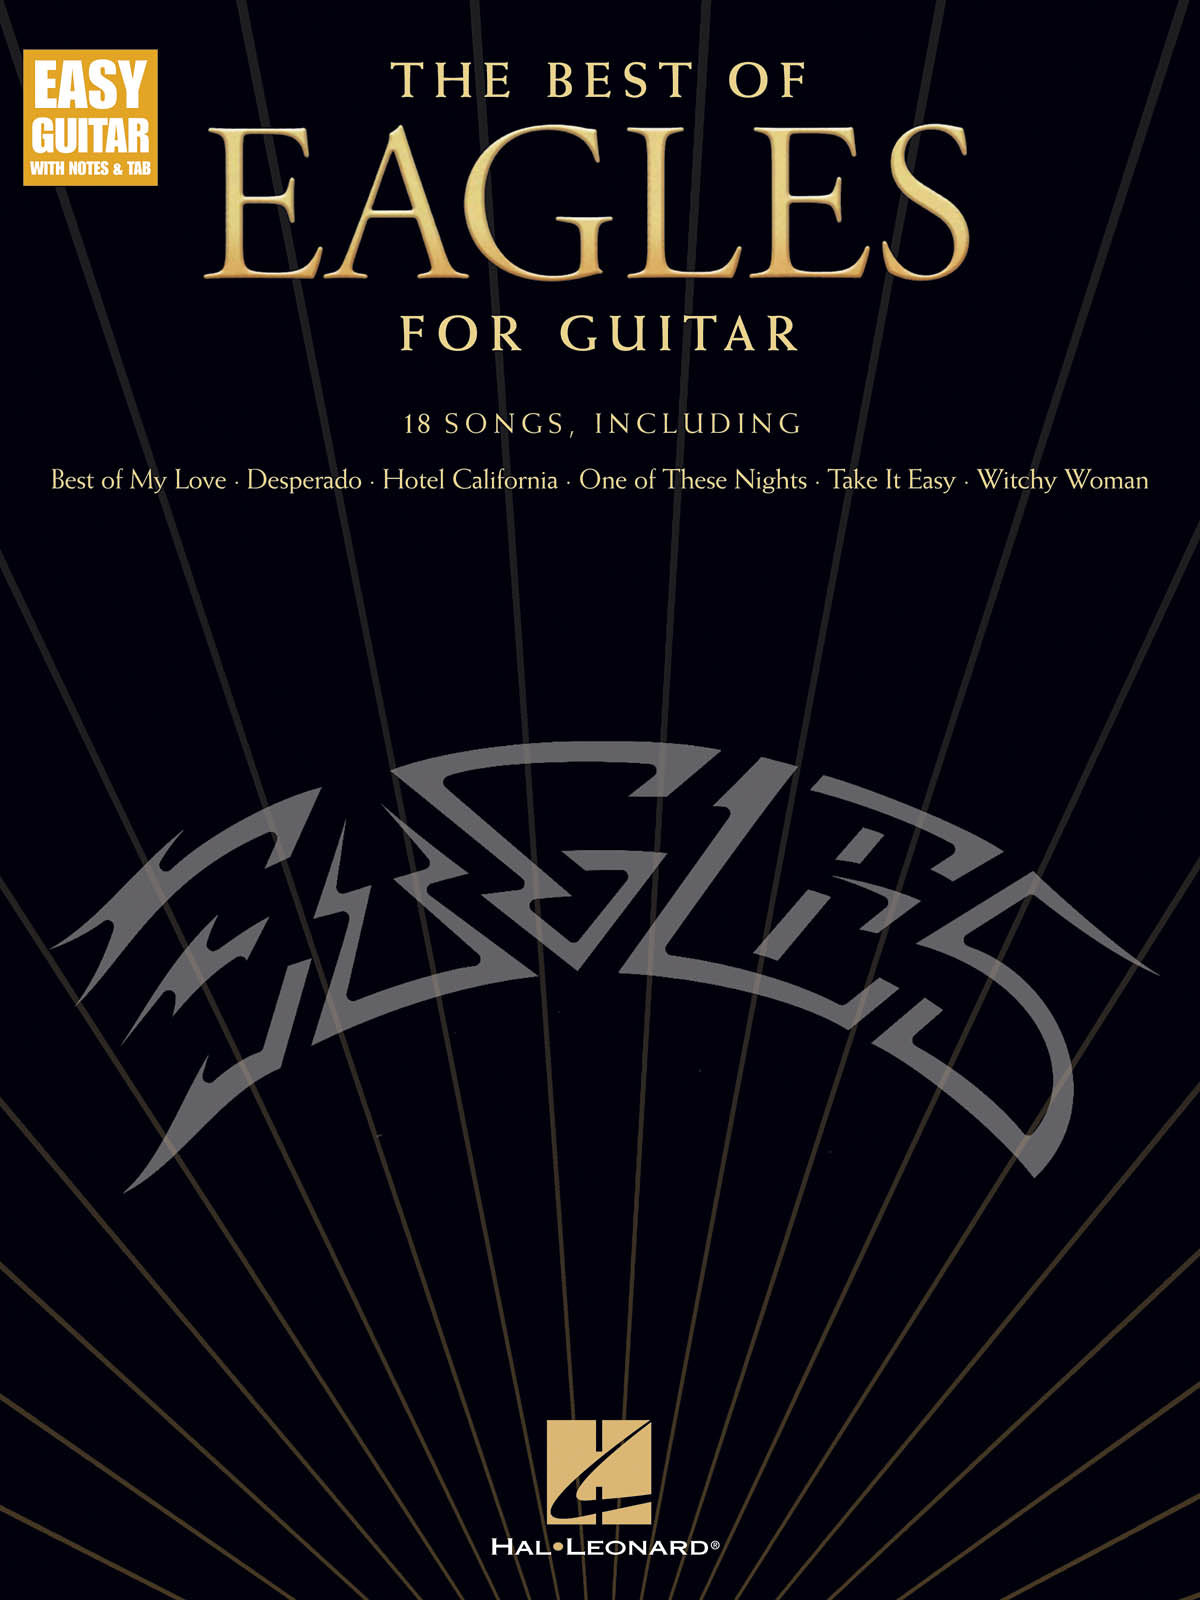 Evergreen Songs Lyric - Lyin' Eyes - Eagles